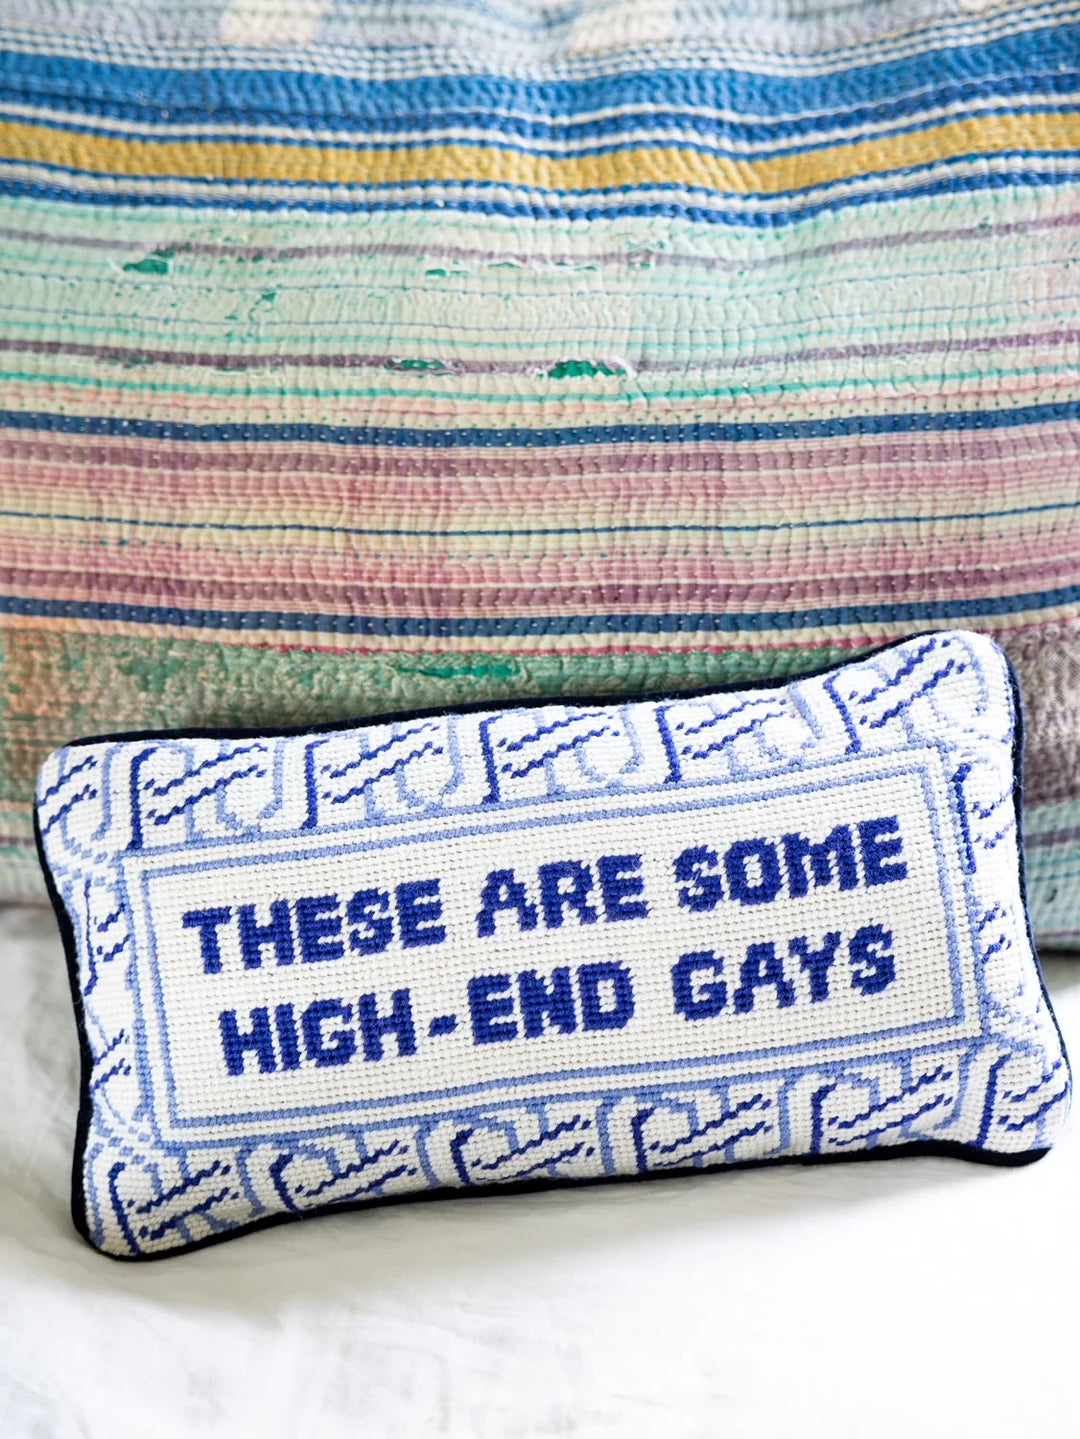 High-End Gays - Furbish - Ileana Makri store